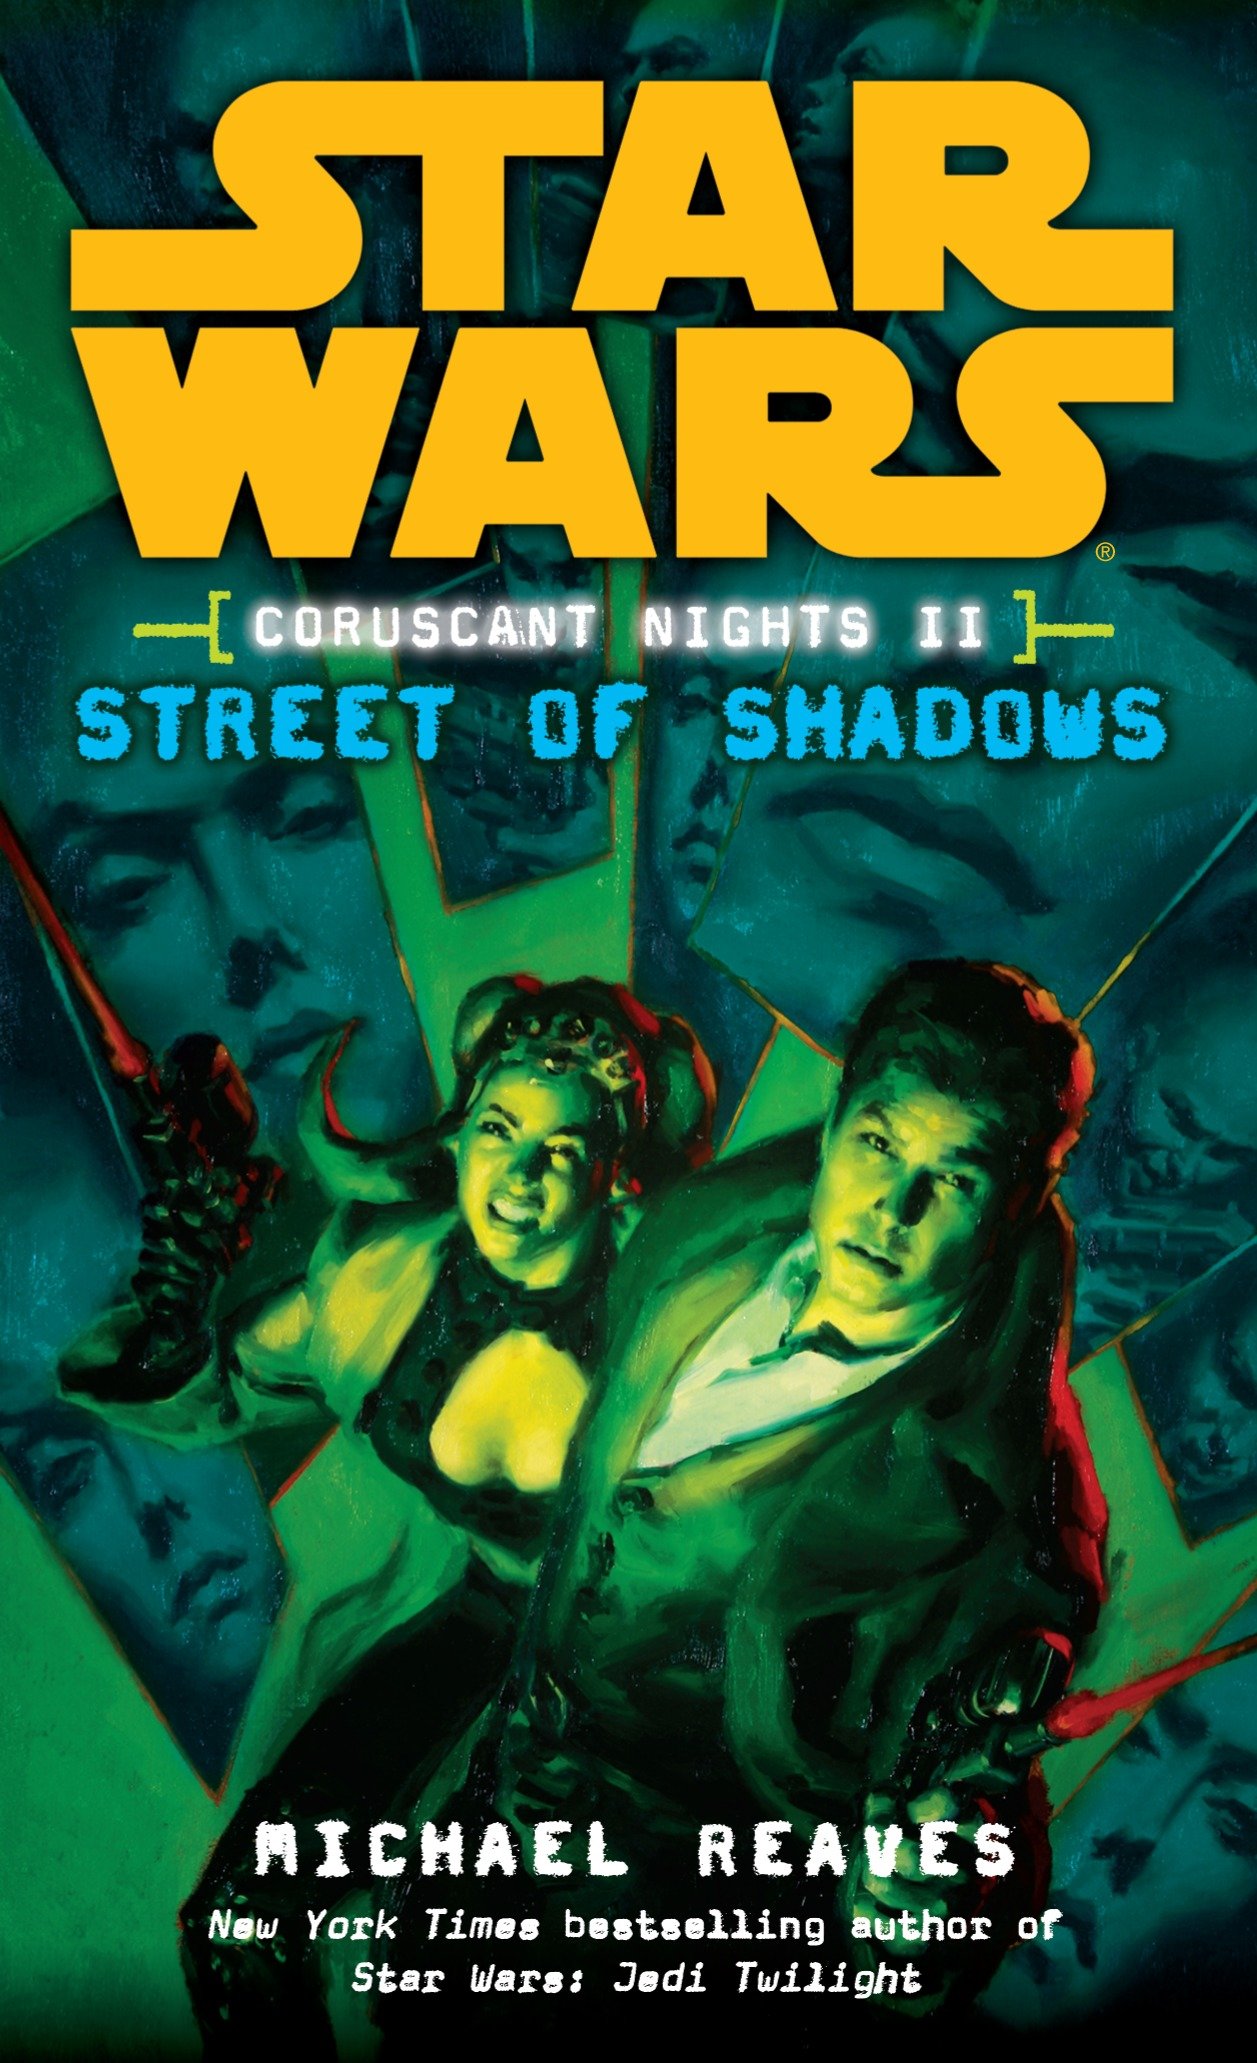 Star Wars Coruscant Nights Paperback (Small) Volume 2 Street of Shadows